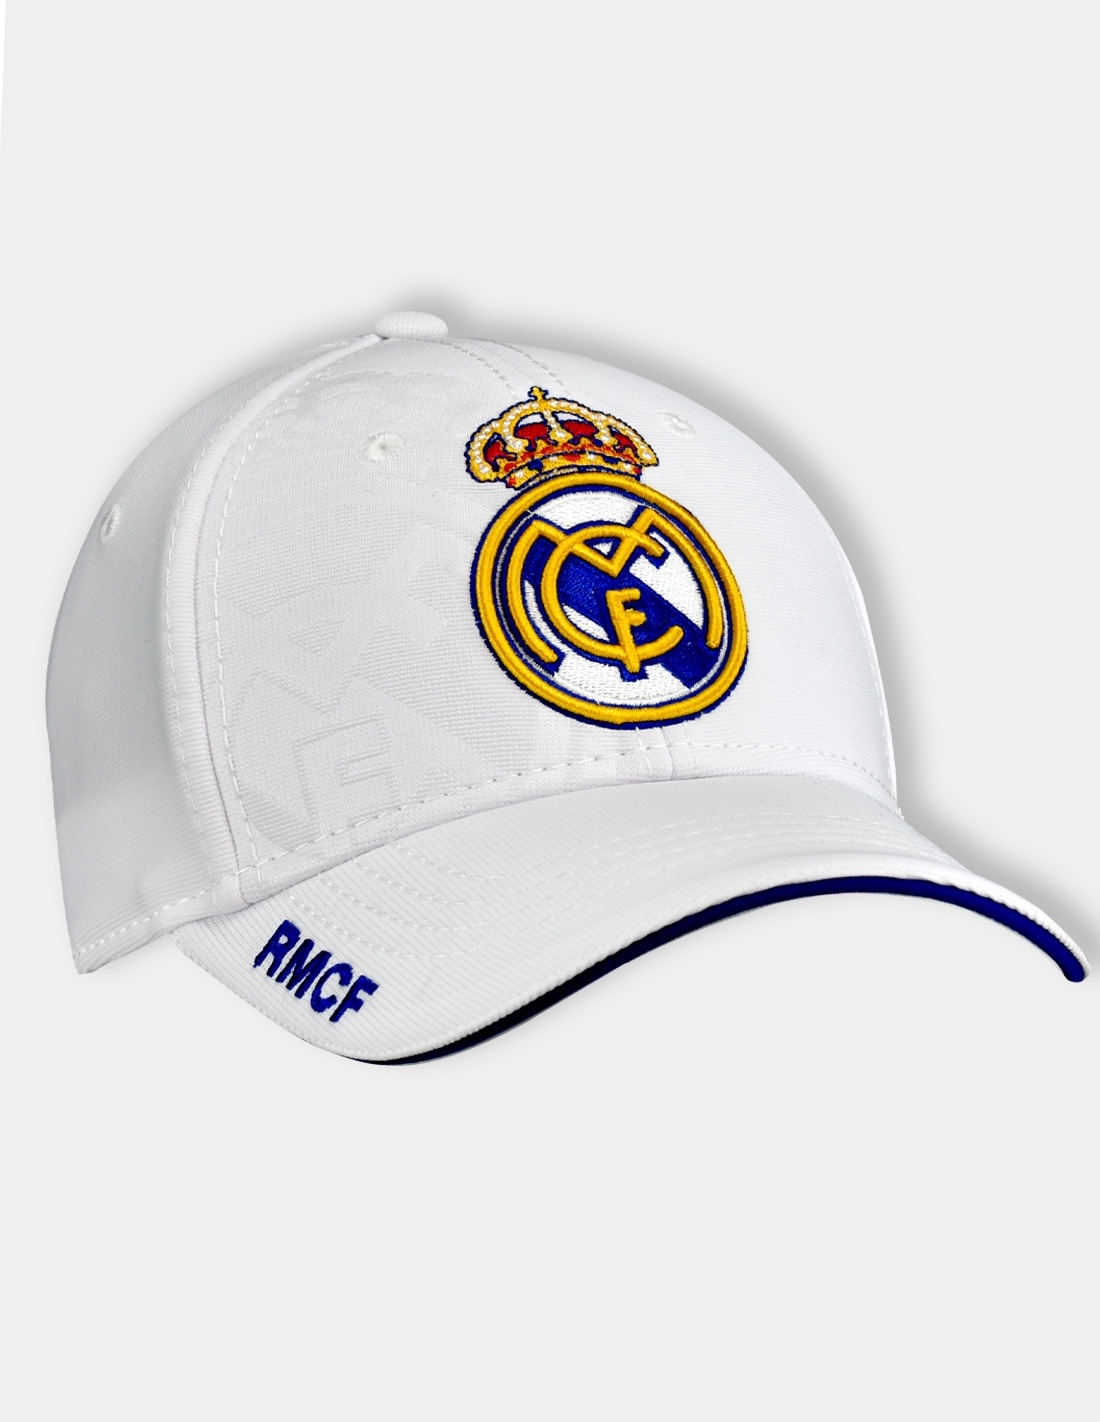 Gorra Real Madrid adulto blanco primer equipo [AB3928]